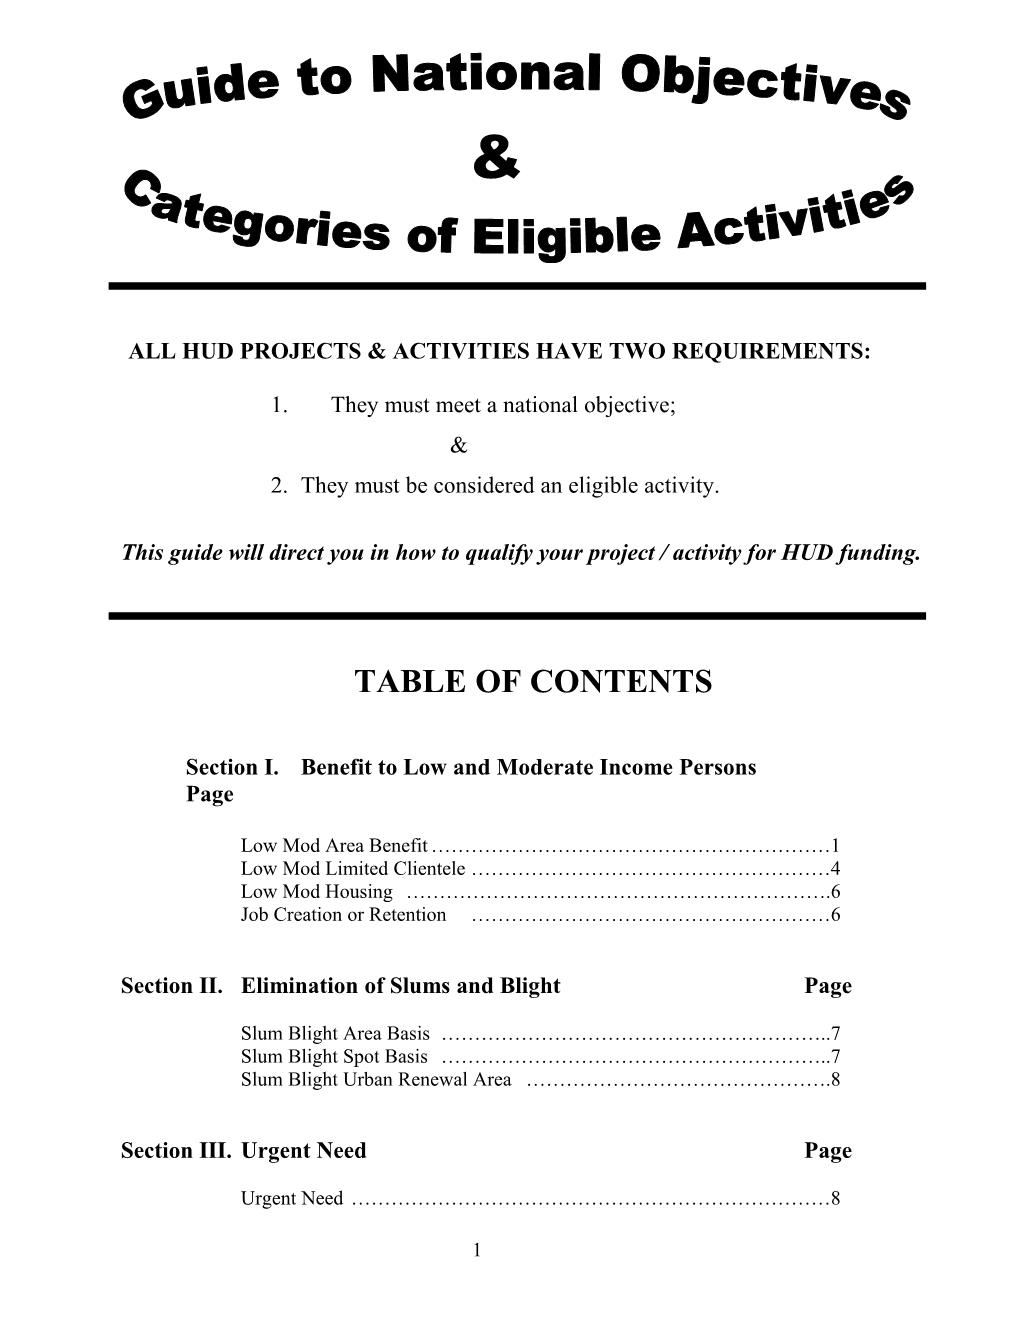 Categories of Eligible Activites (24Cfr570